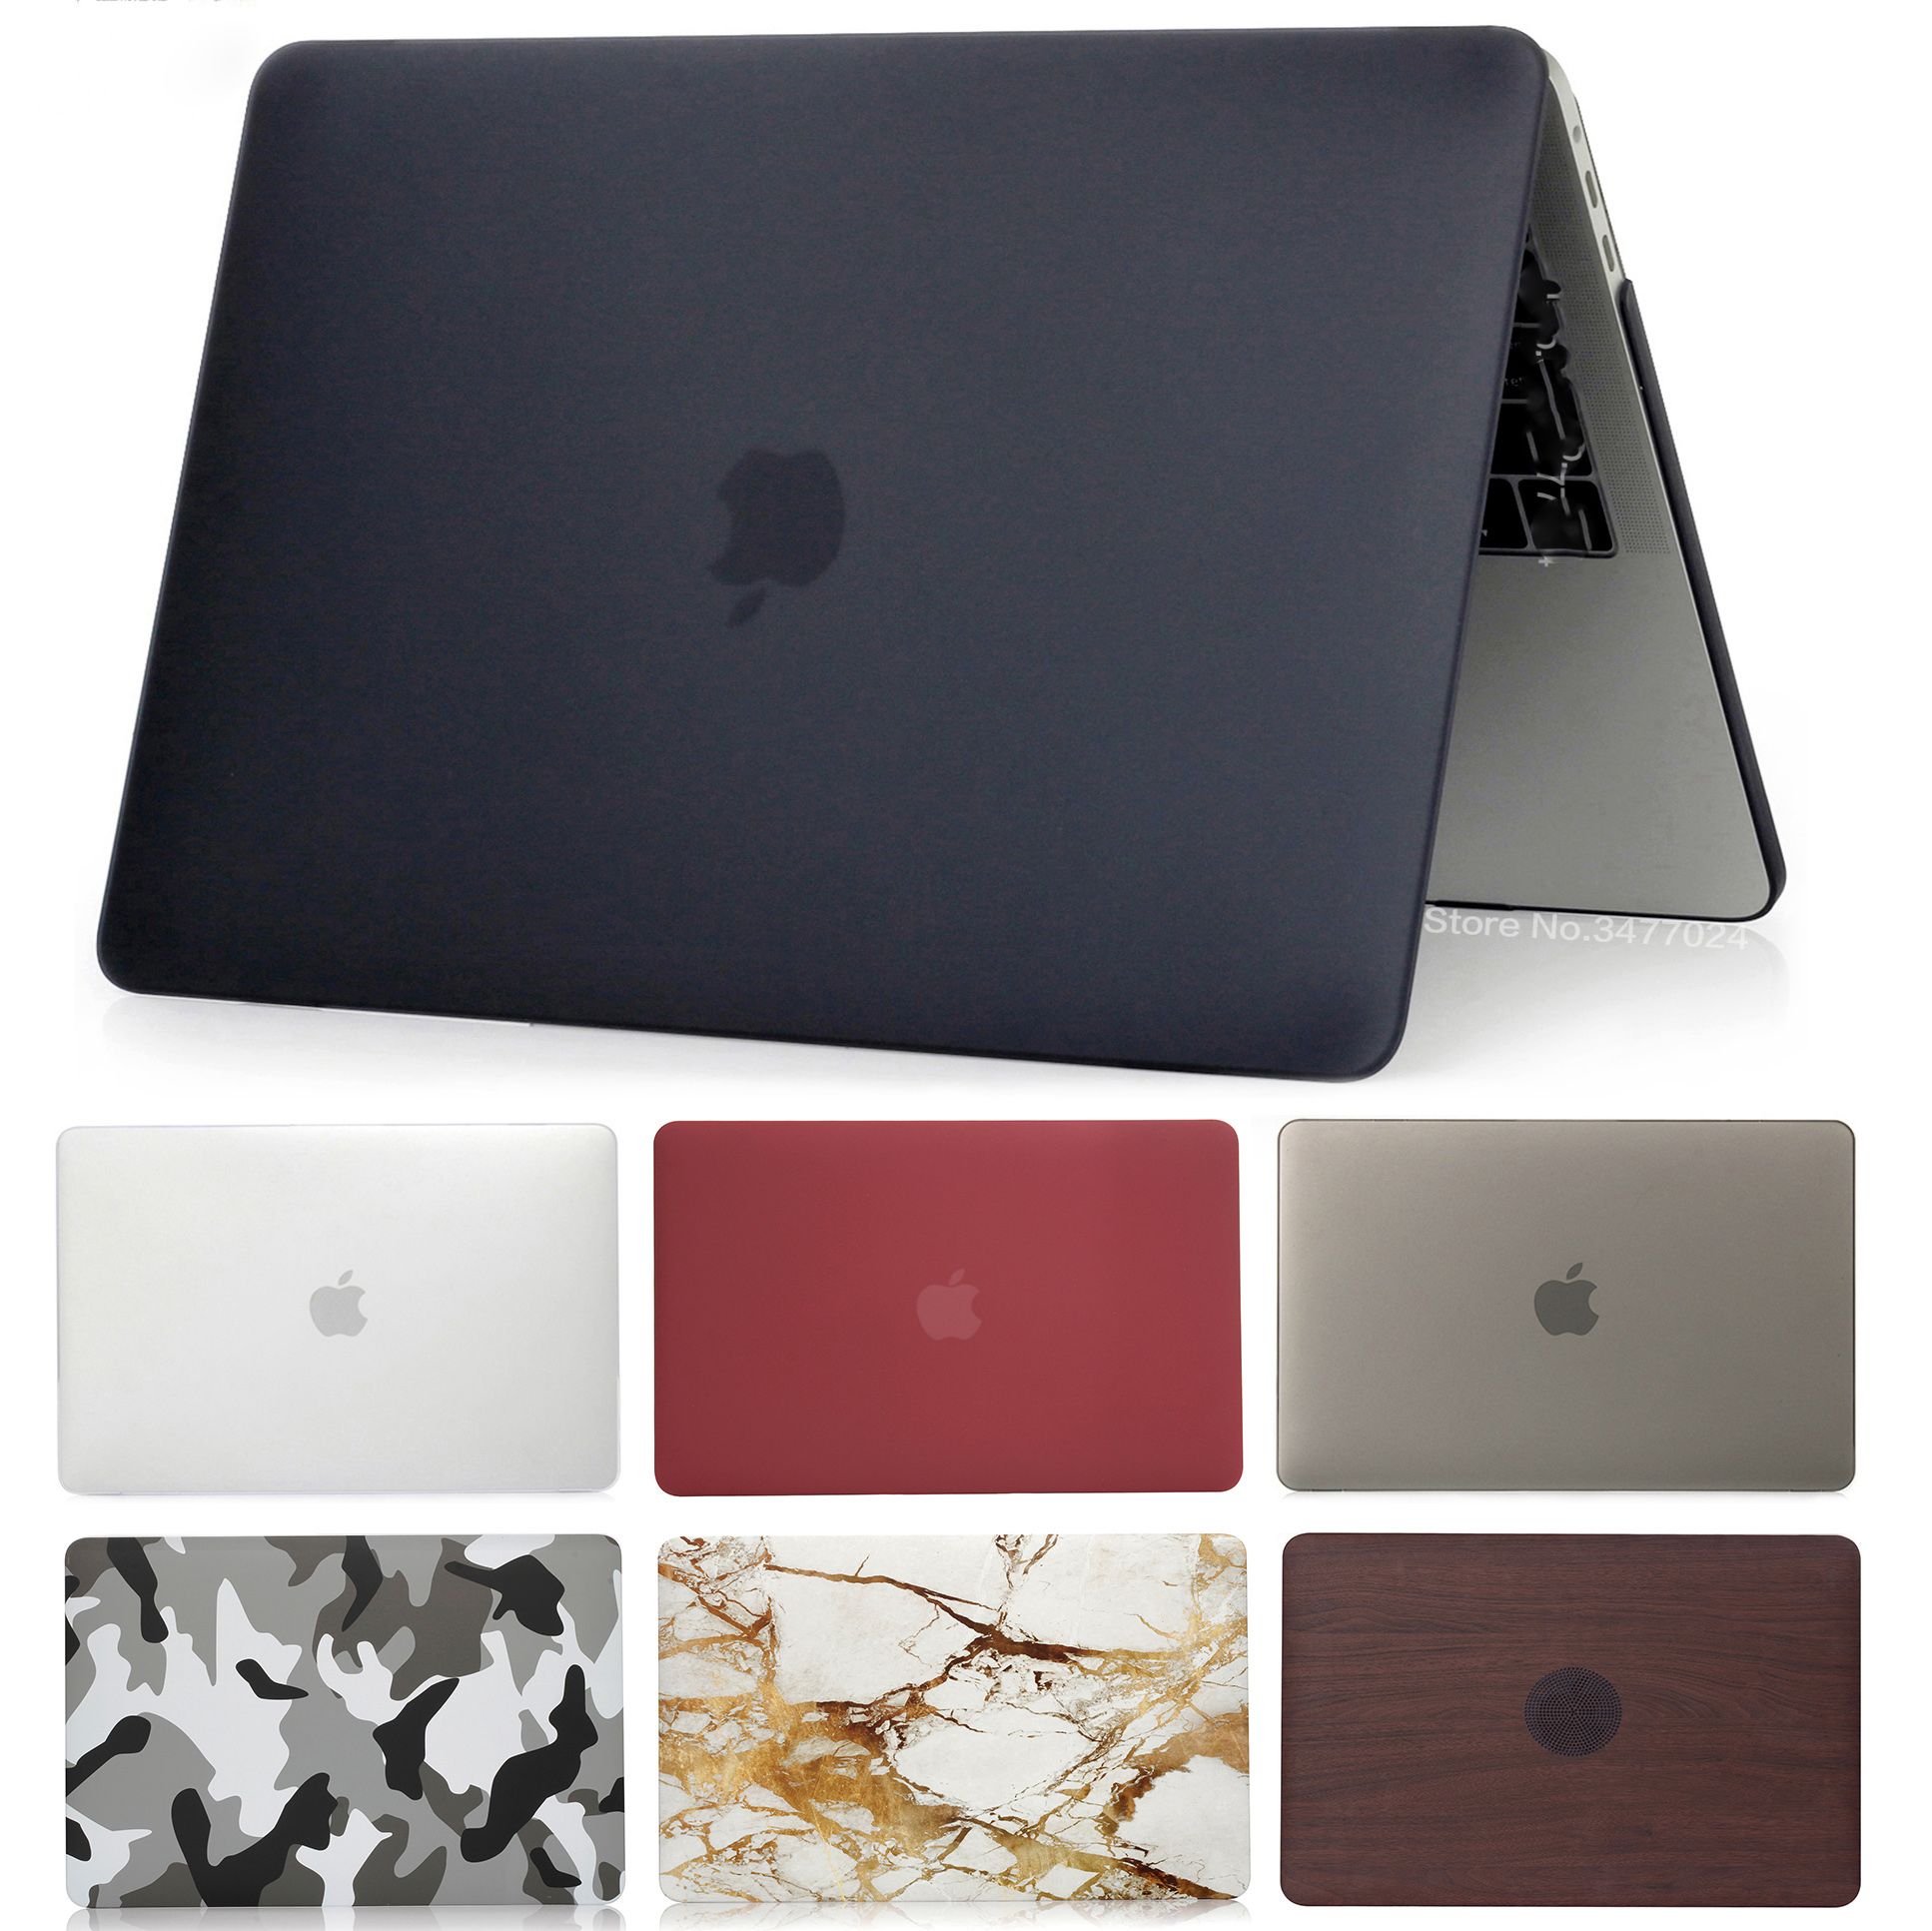 En general Noreste Arqueológico Hot Laptop Case para Macbook Pro Retina Air 11 12 13 15,2019 para mac Air